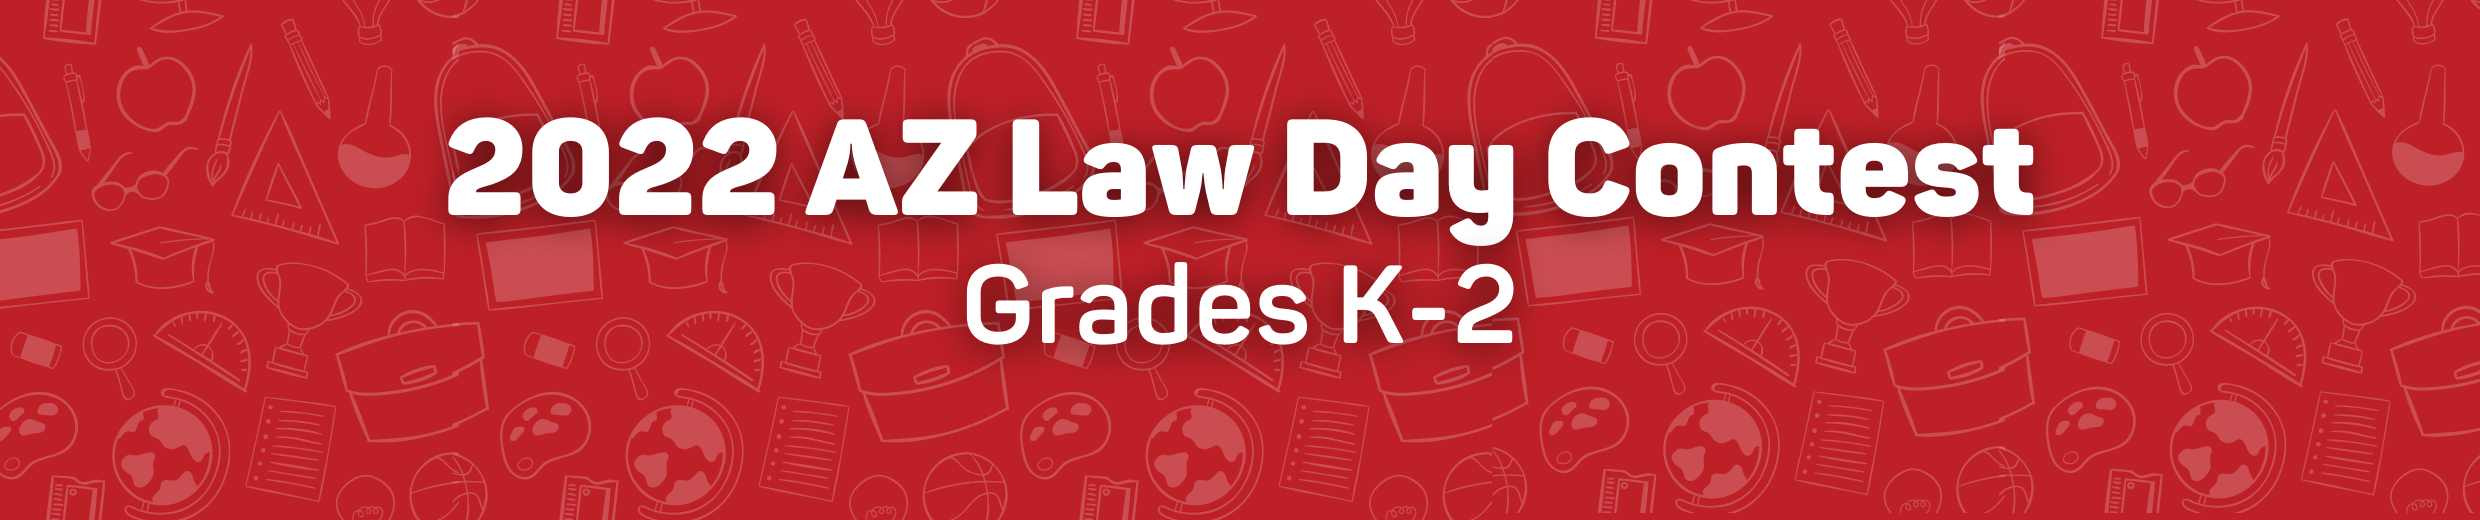 2022 Law Day Contest Grades K-2